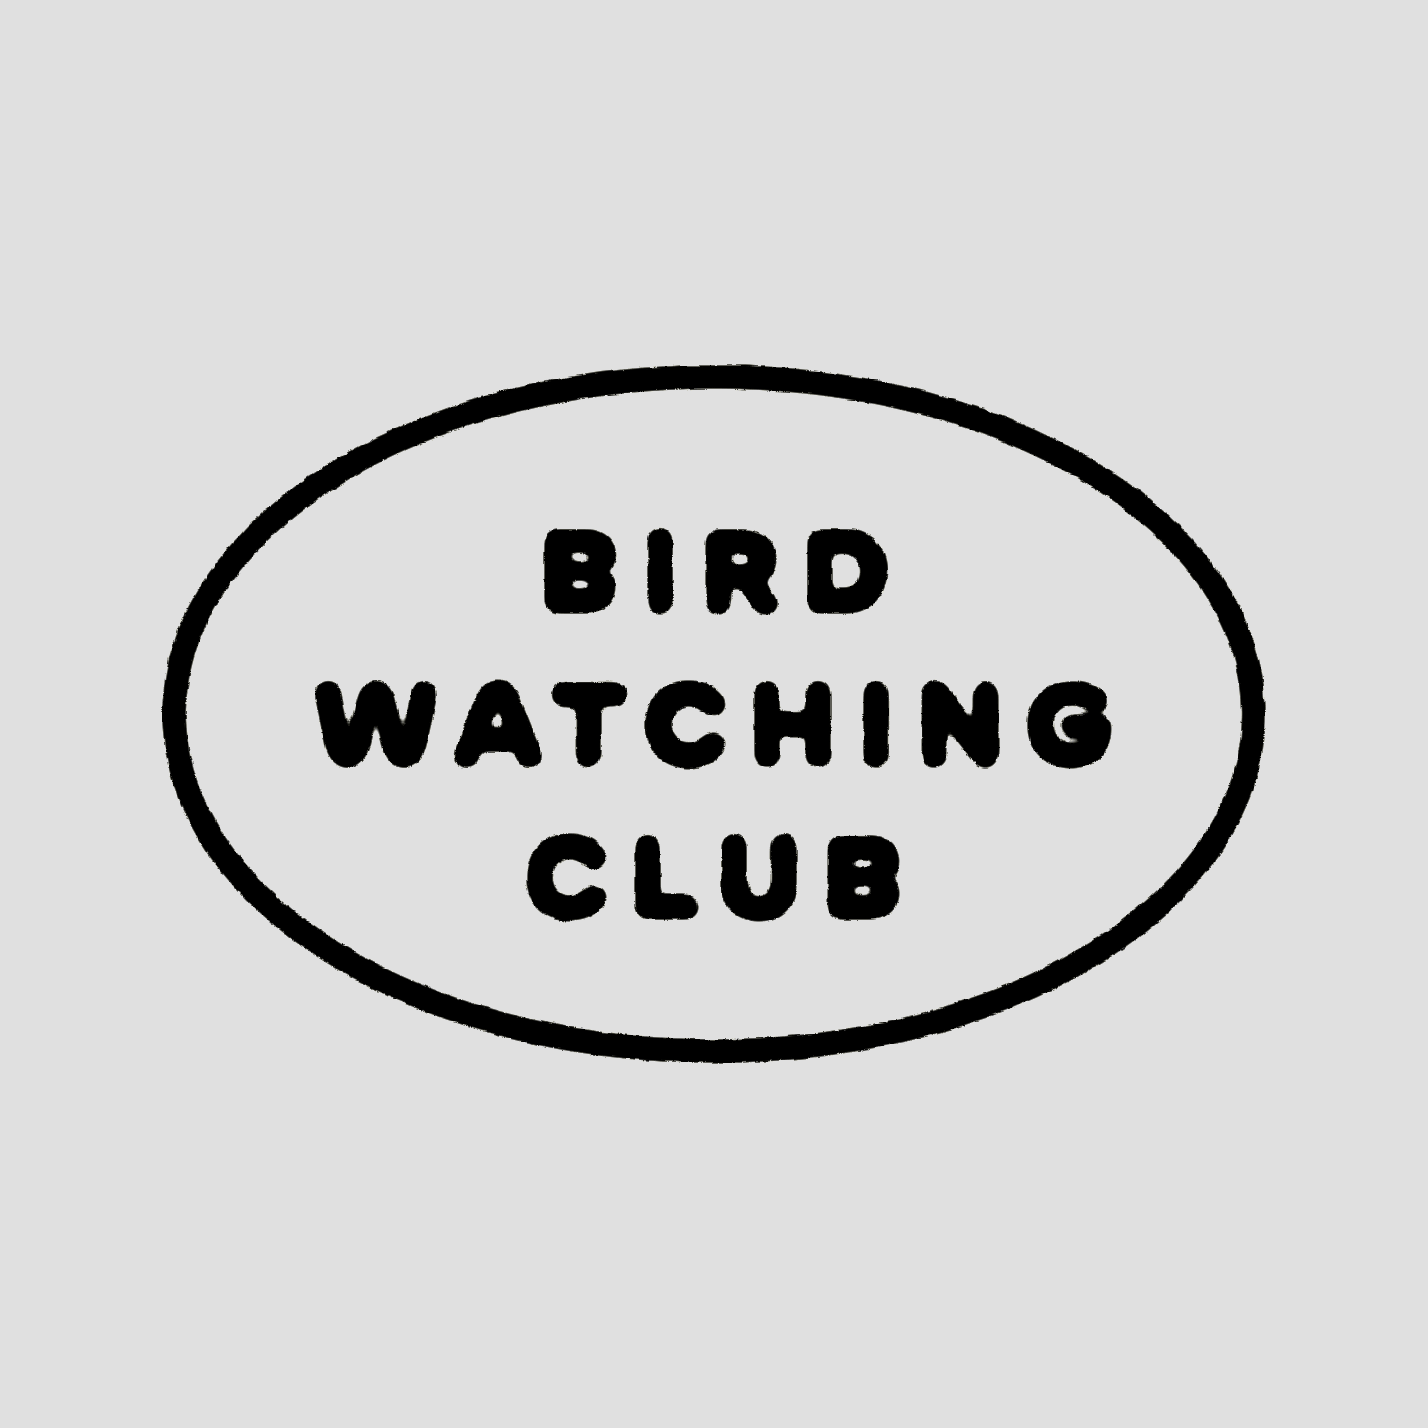 Birdwatching club logo